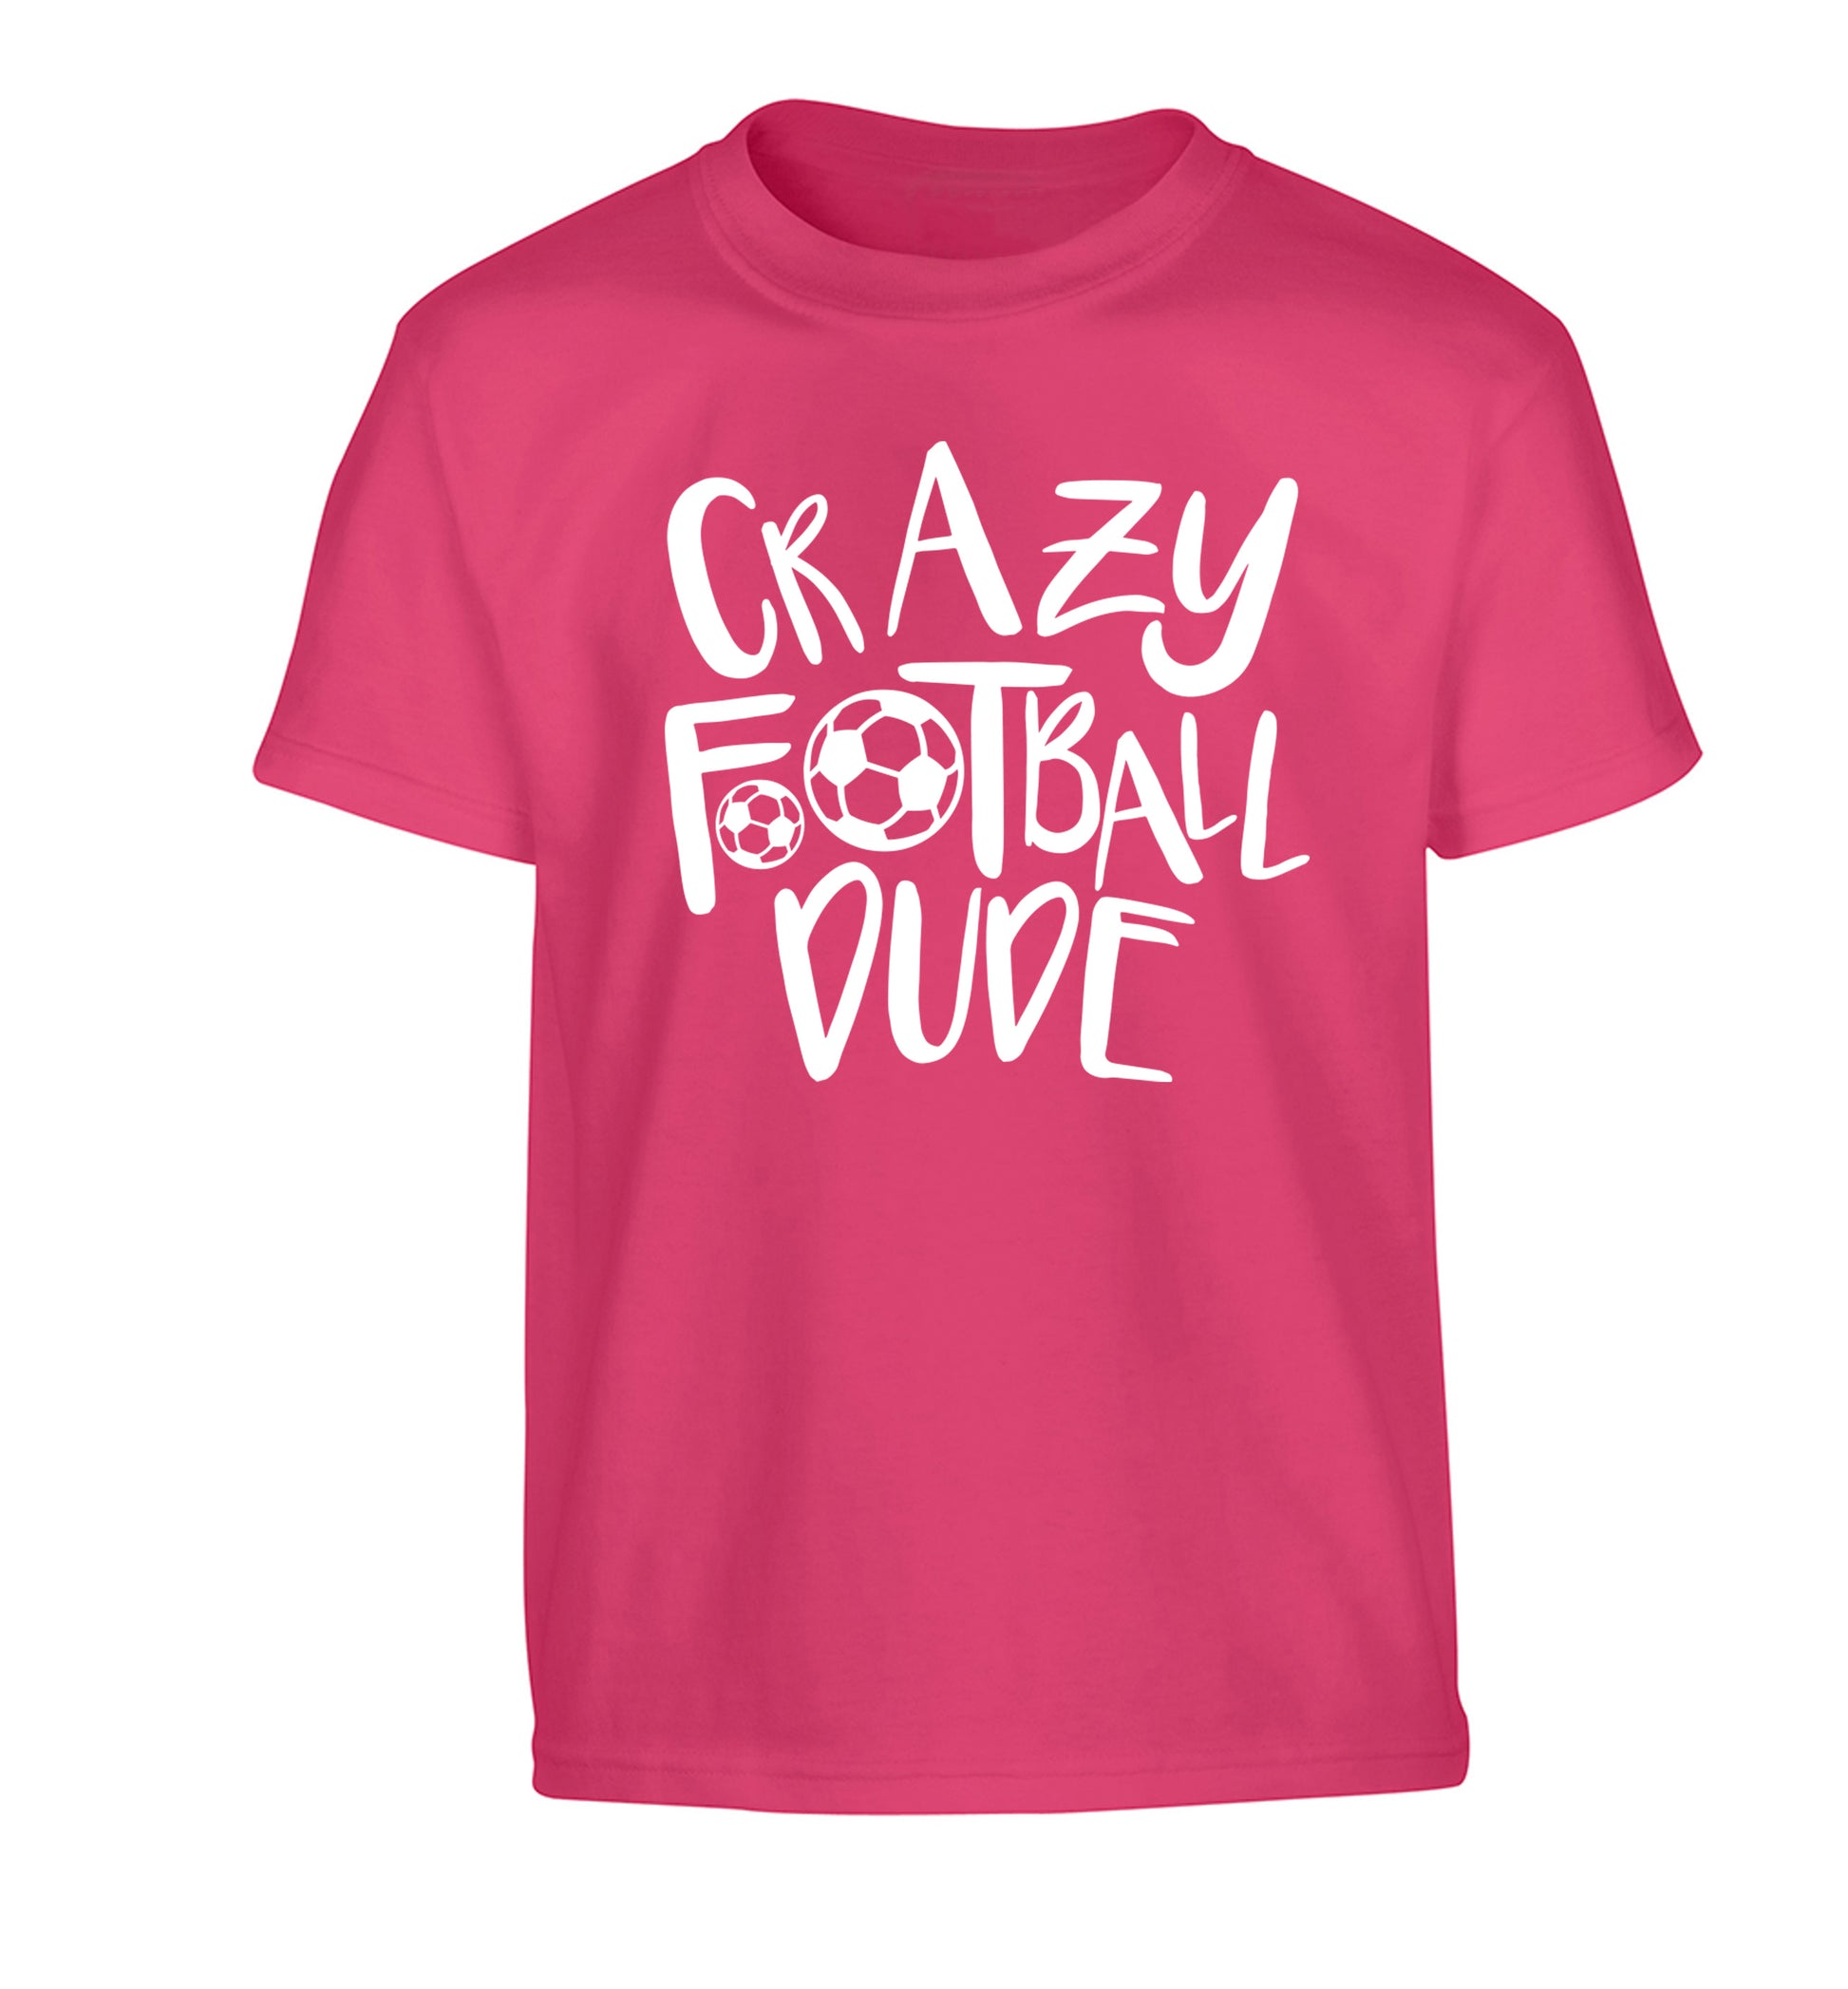 Crazy football dude Children's pink Tshirt 12-14 Years